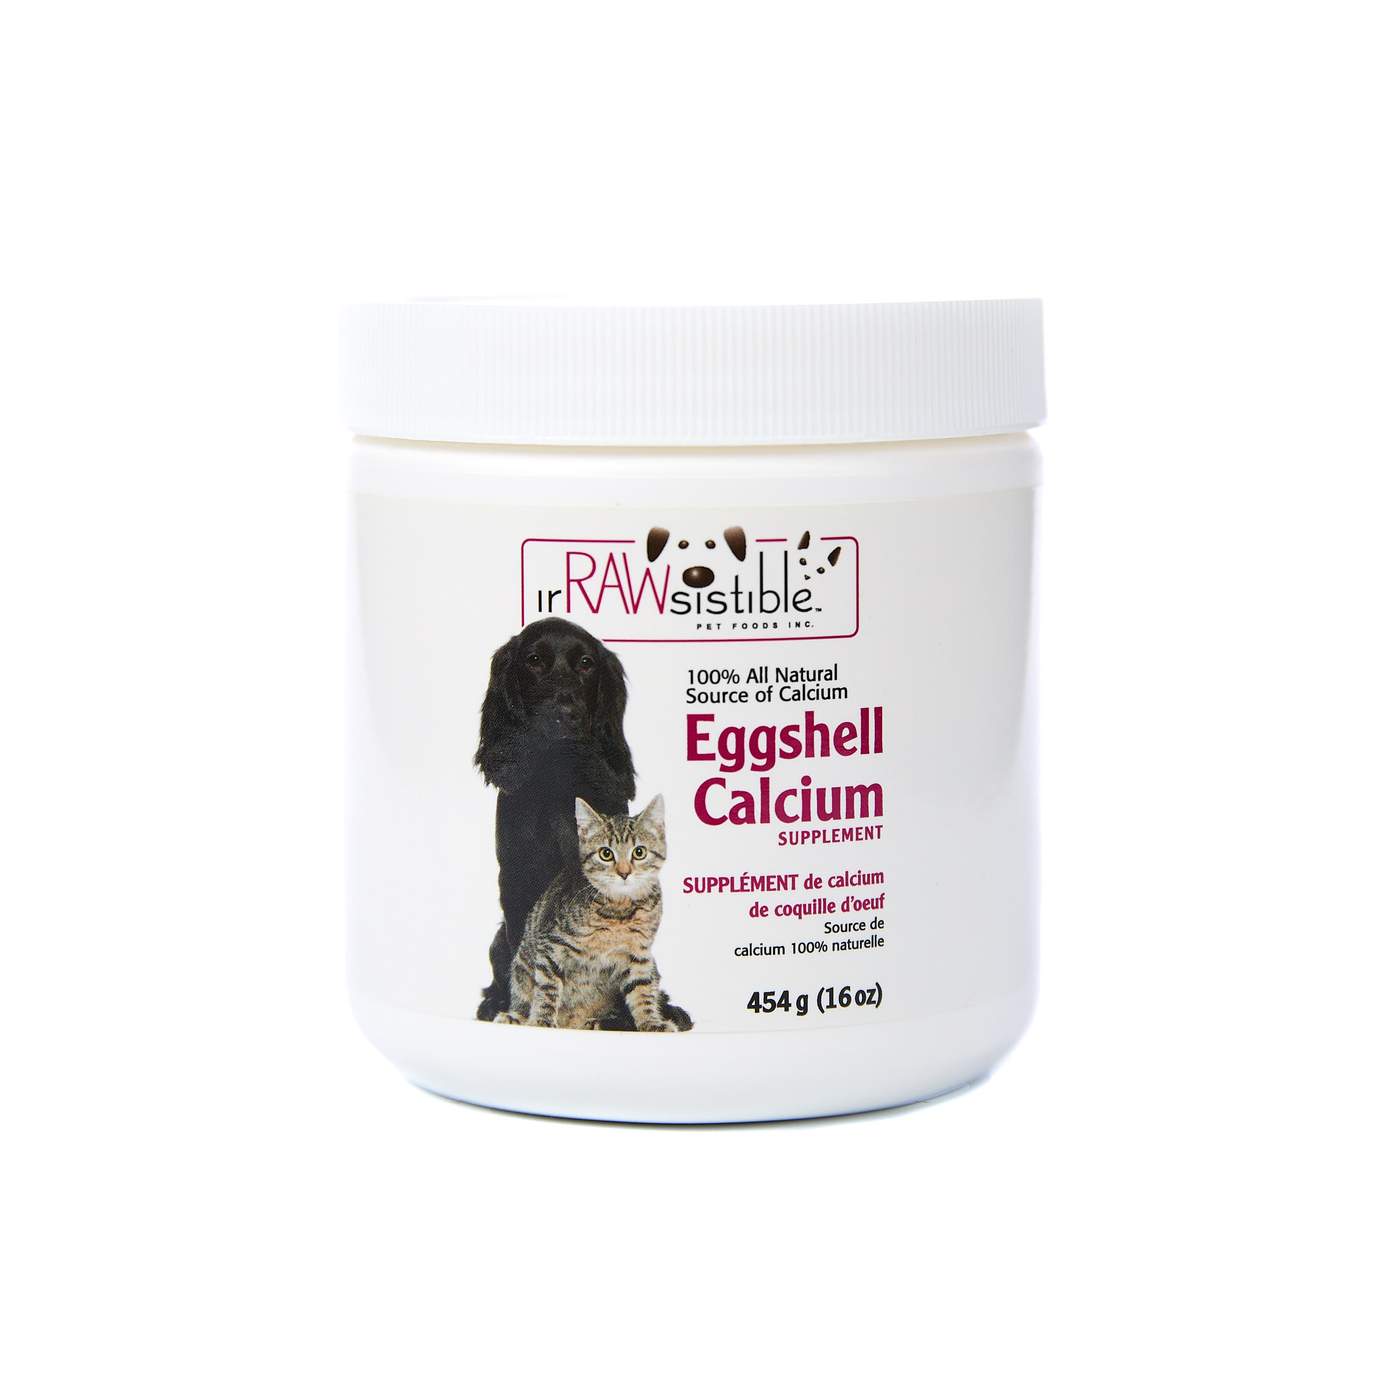 IrRAWsistible Eggshell Calcium